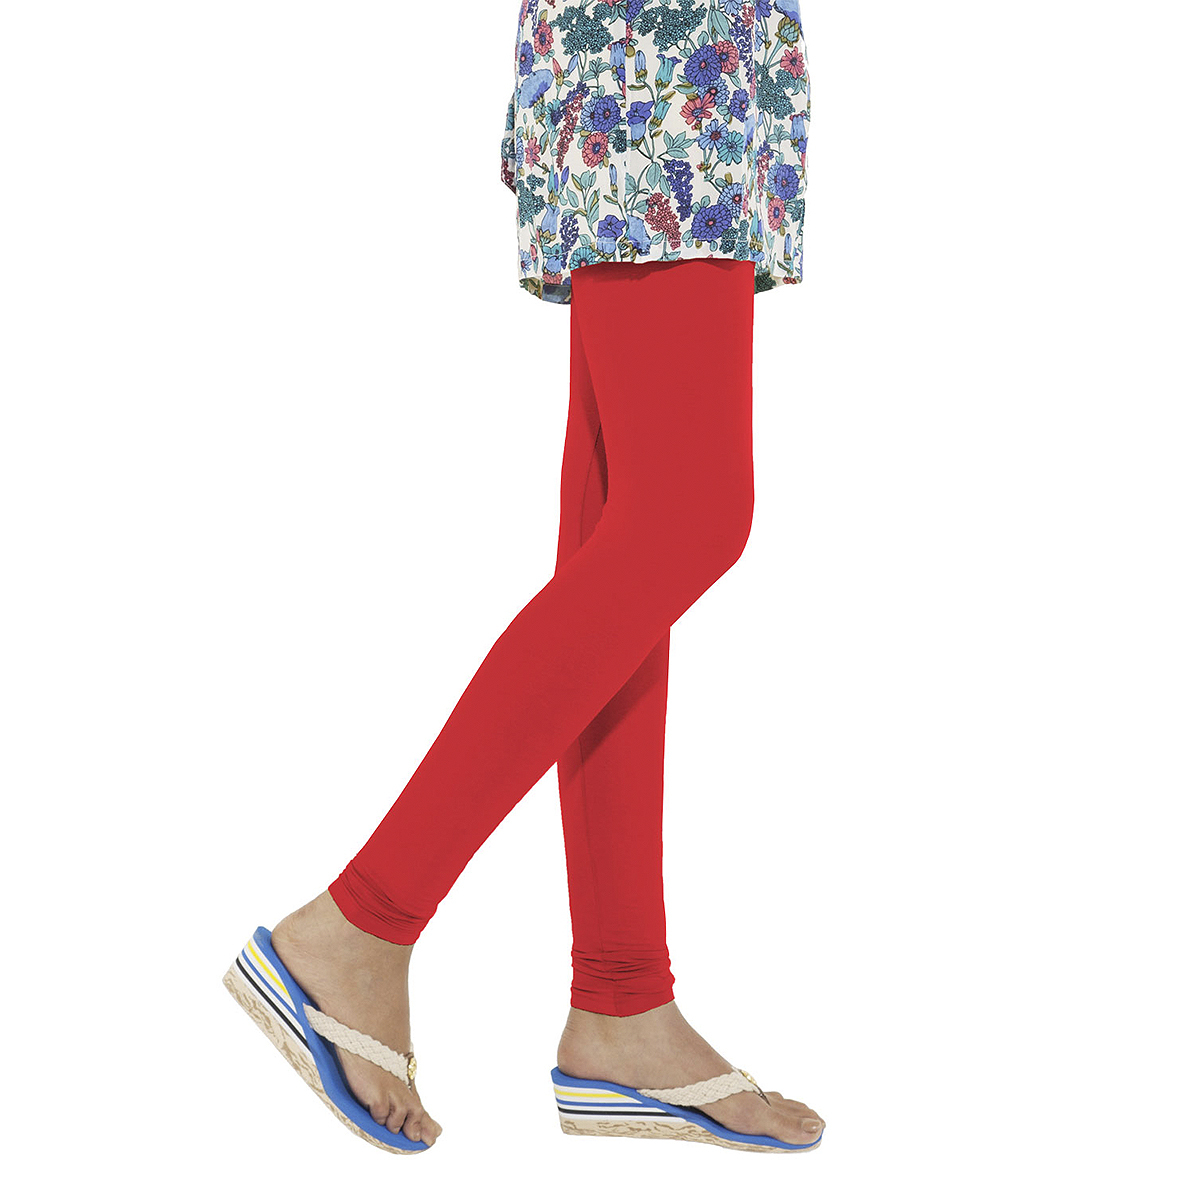 Buy Go Colors Women Solid Color Churidar Legging - Bright Red - S